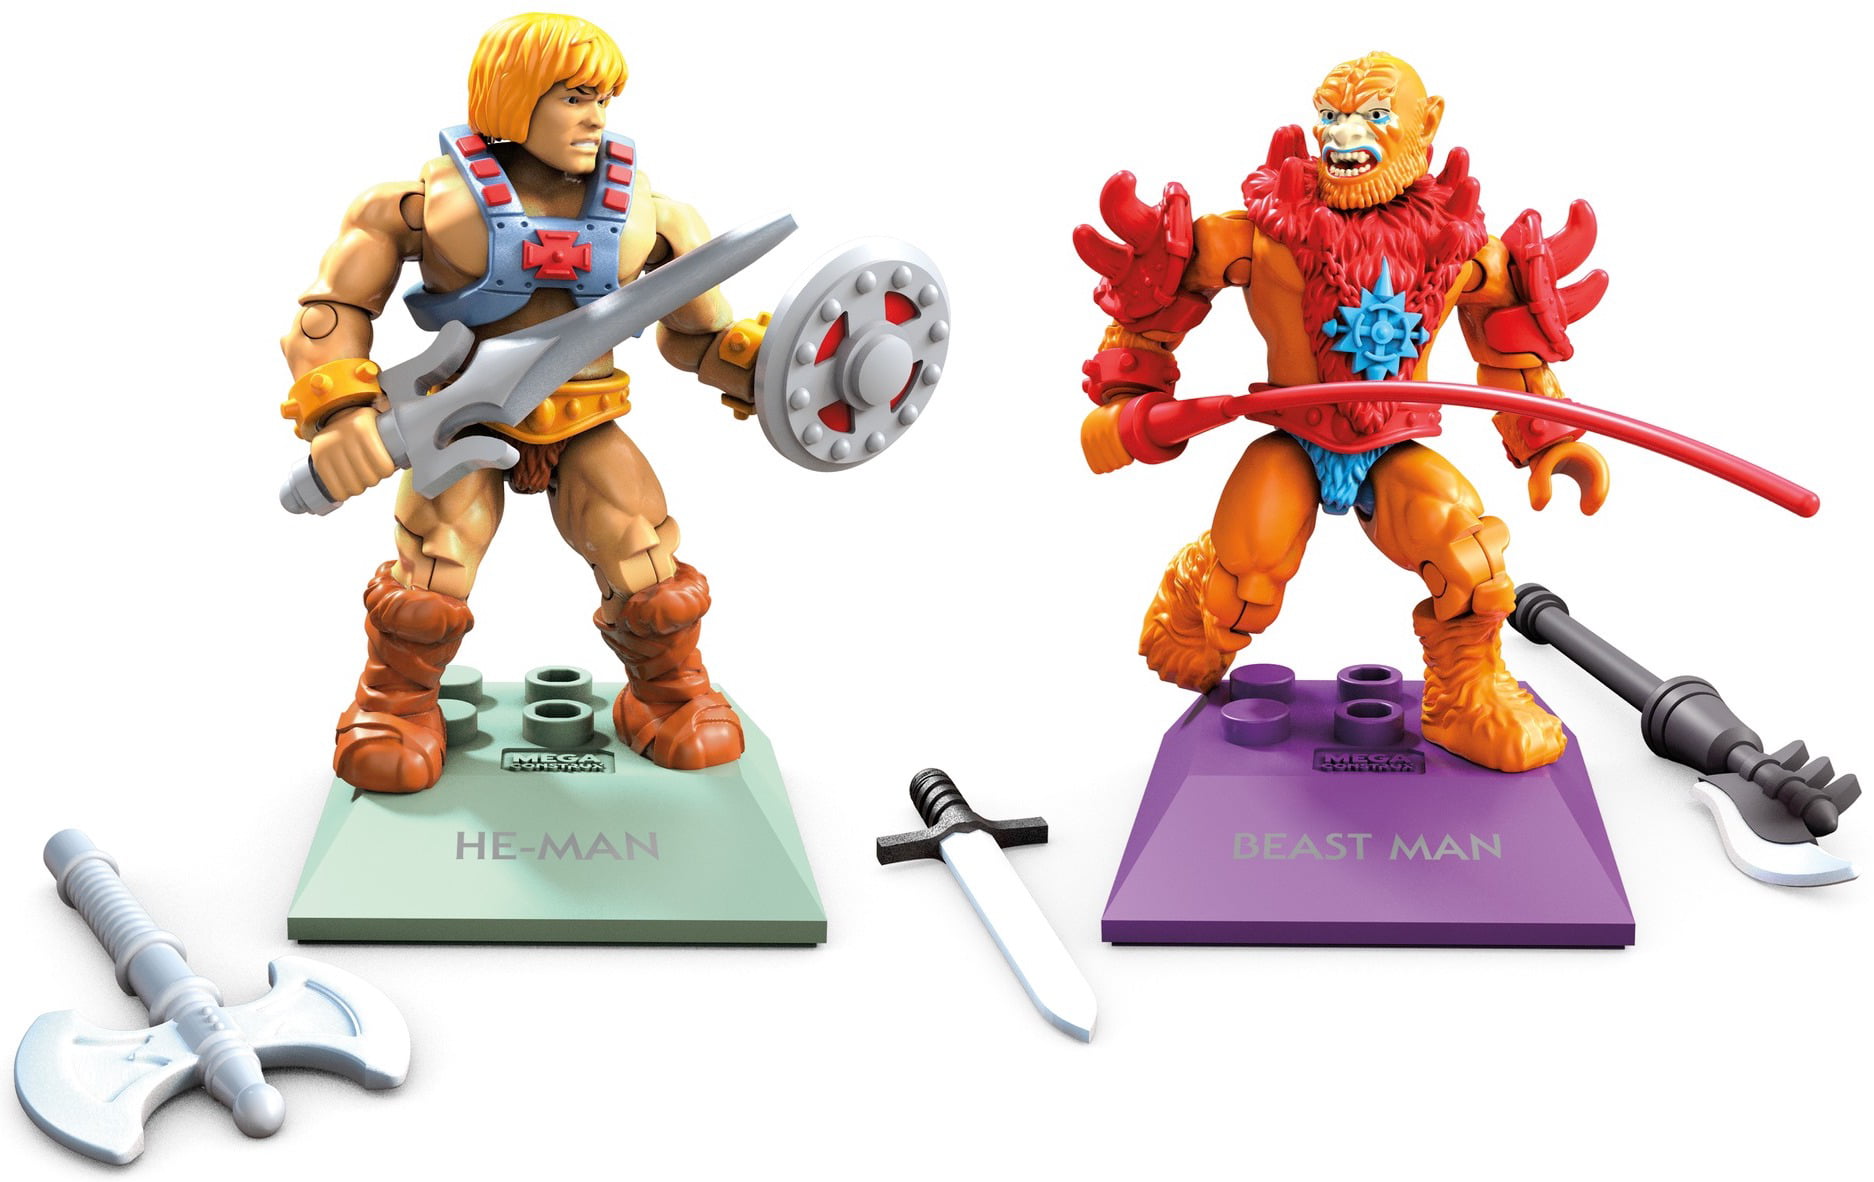 MEGA Probuilder Masters of the Universe He-Man Vs Beast Man Construction Set for sale online 